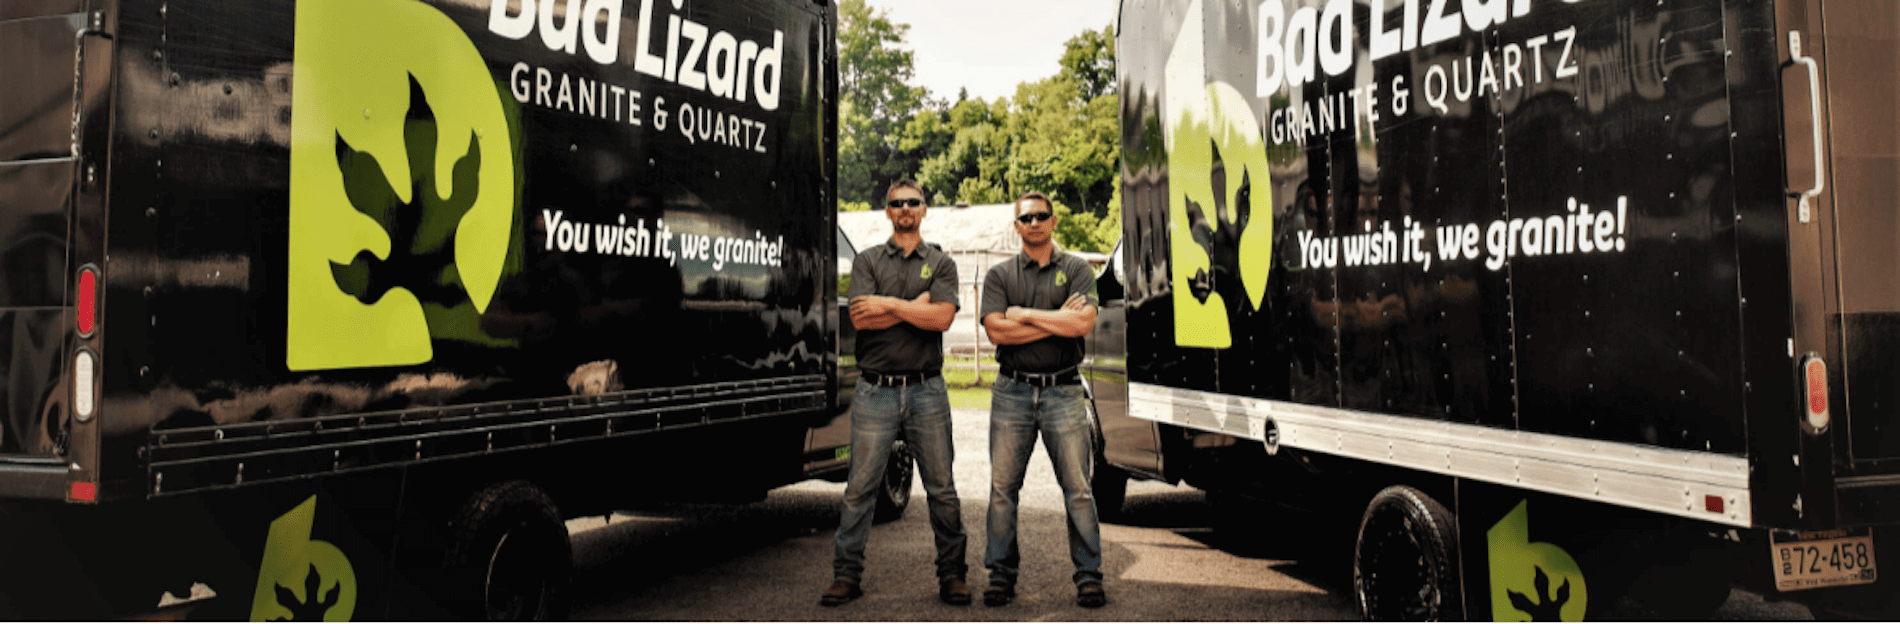 Bad Lizard Home Show